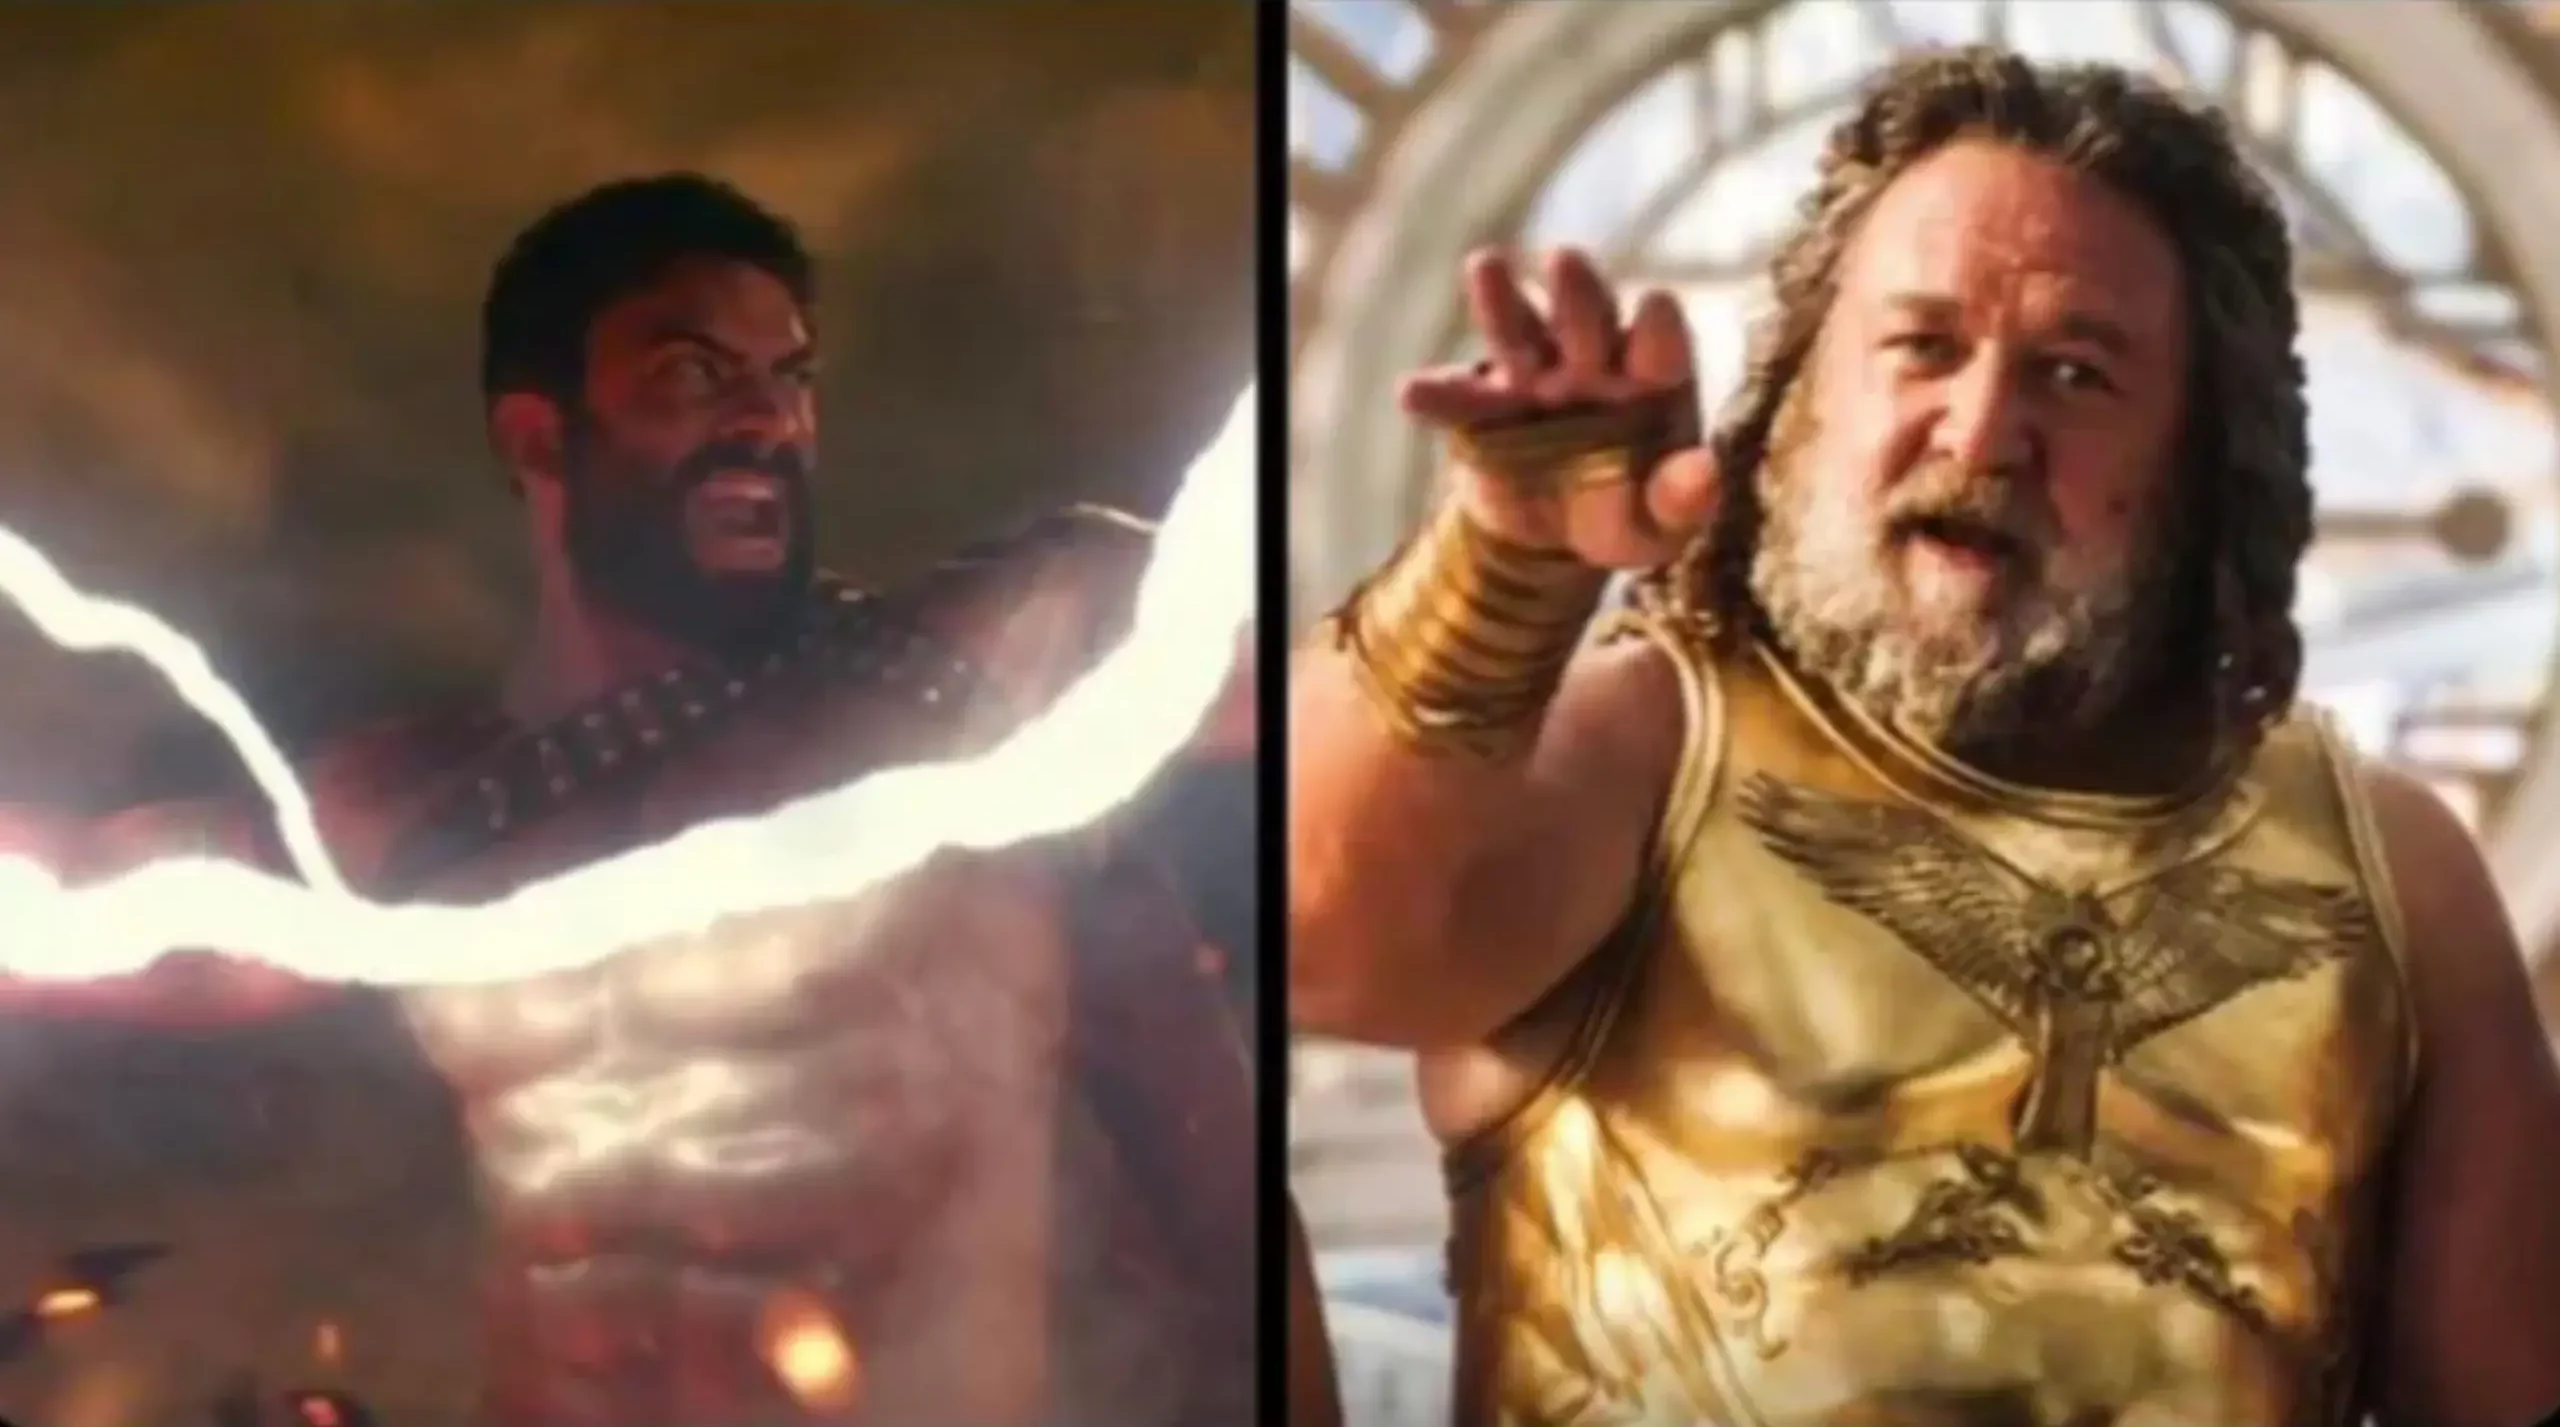 DC's Zeus and Marvel's Zeus